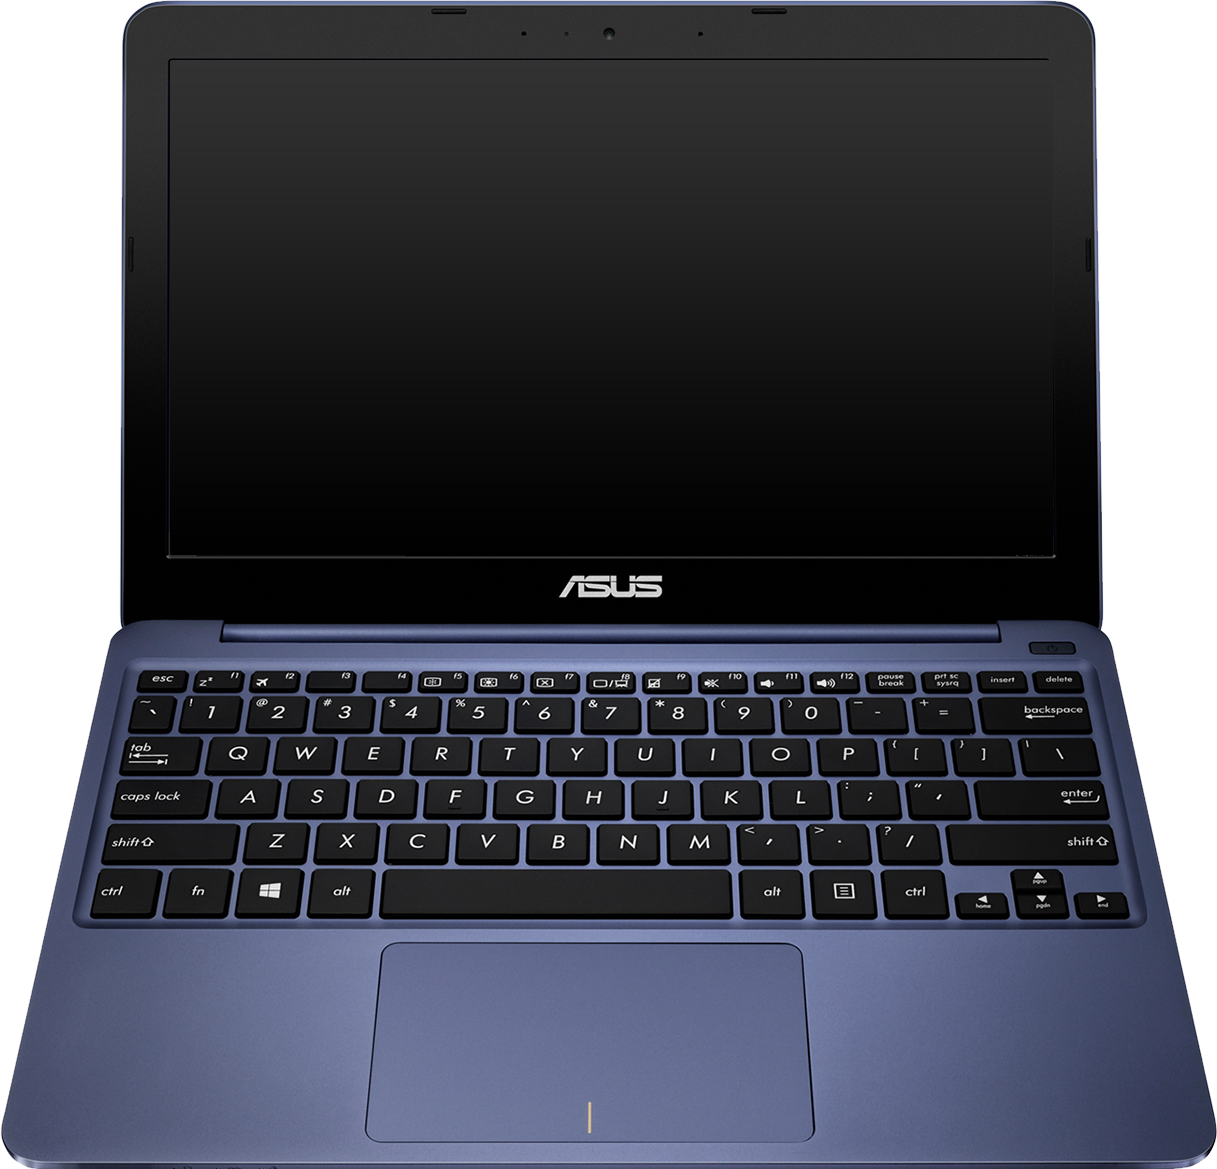 ASUS Vivobook E200HA | Laptops | ASUS Global